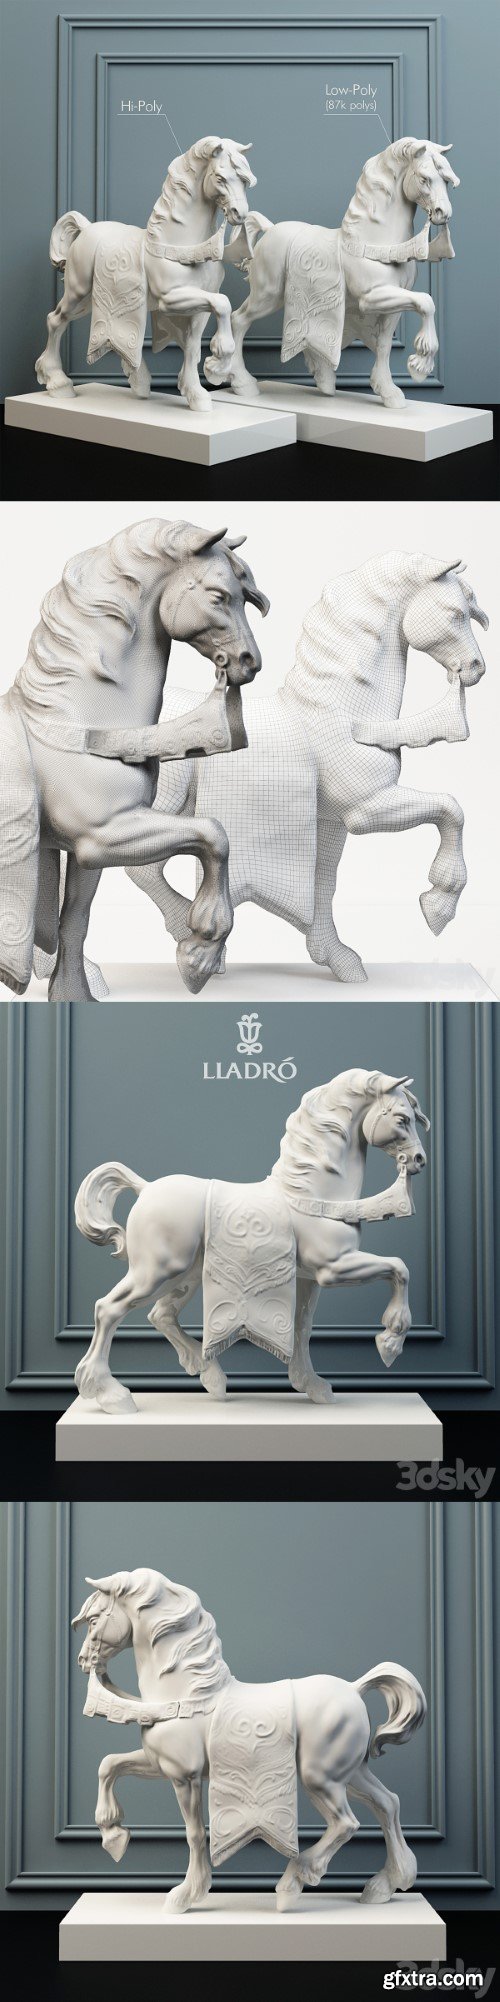 Lladro sculpture palace horse